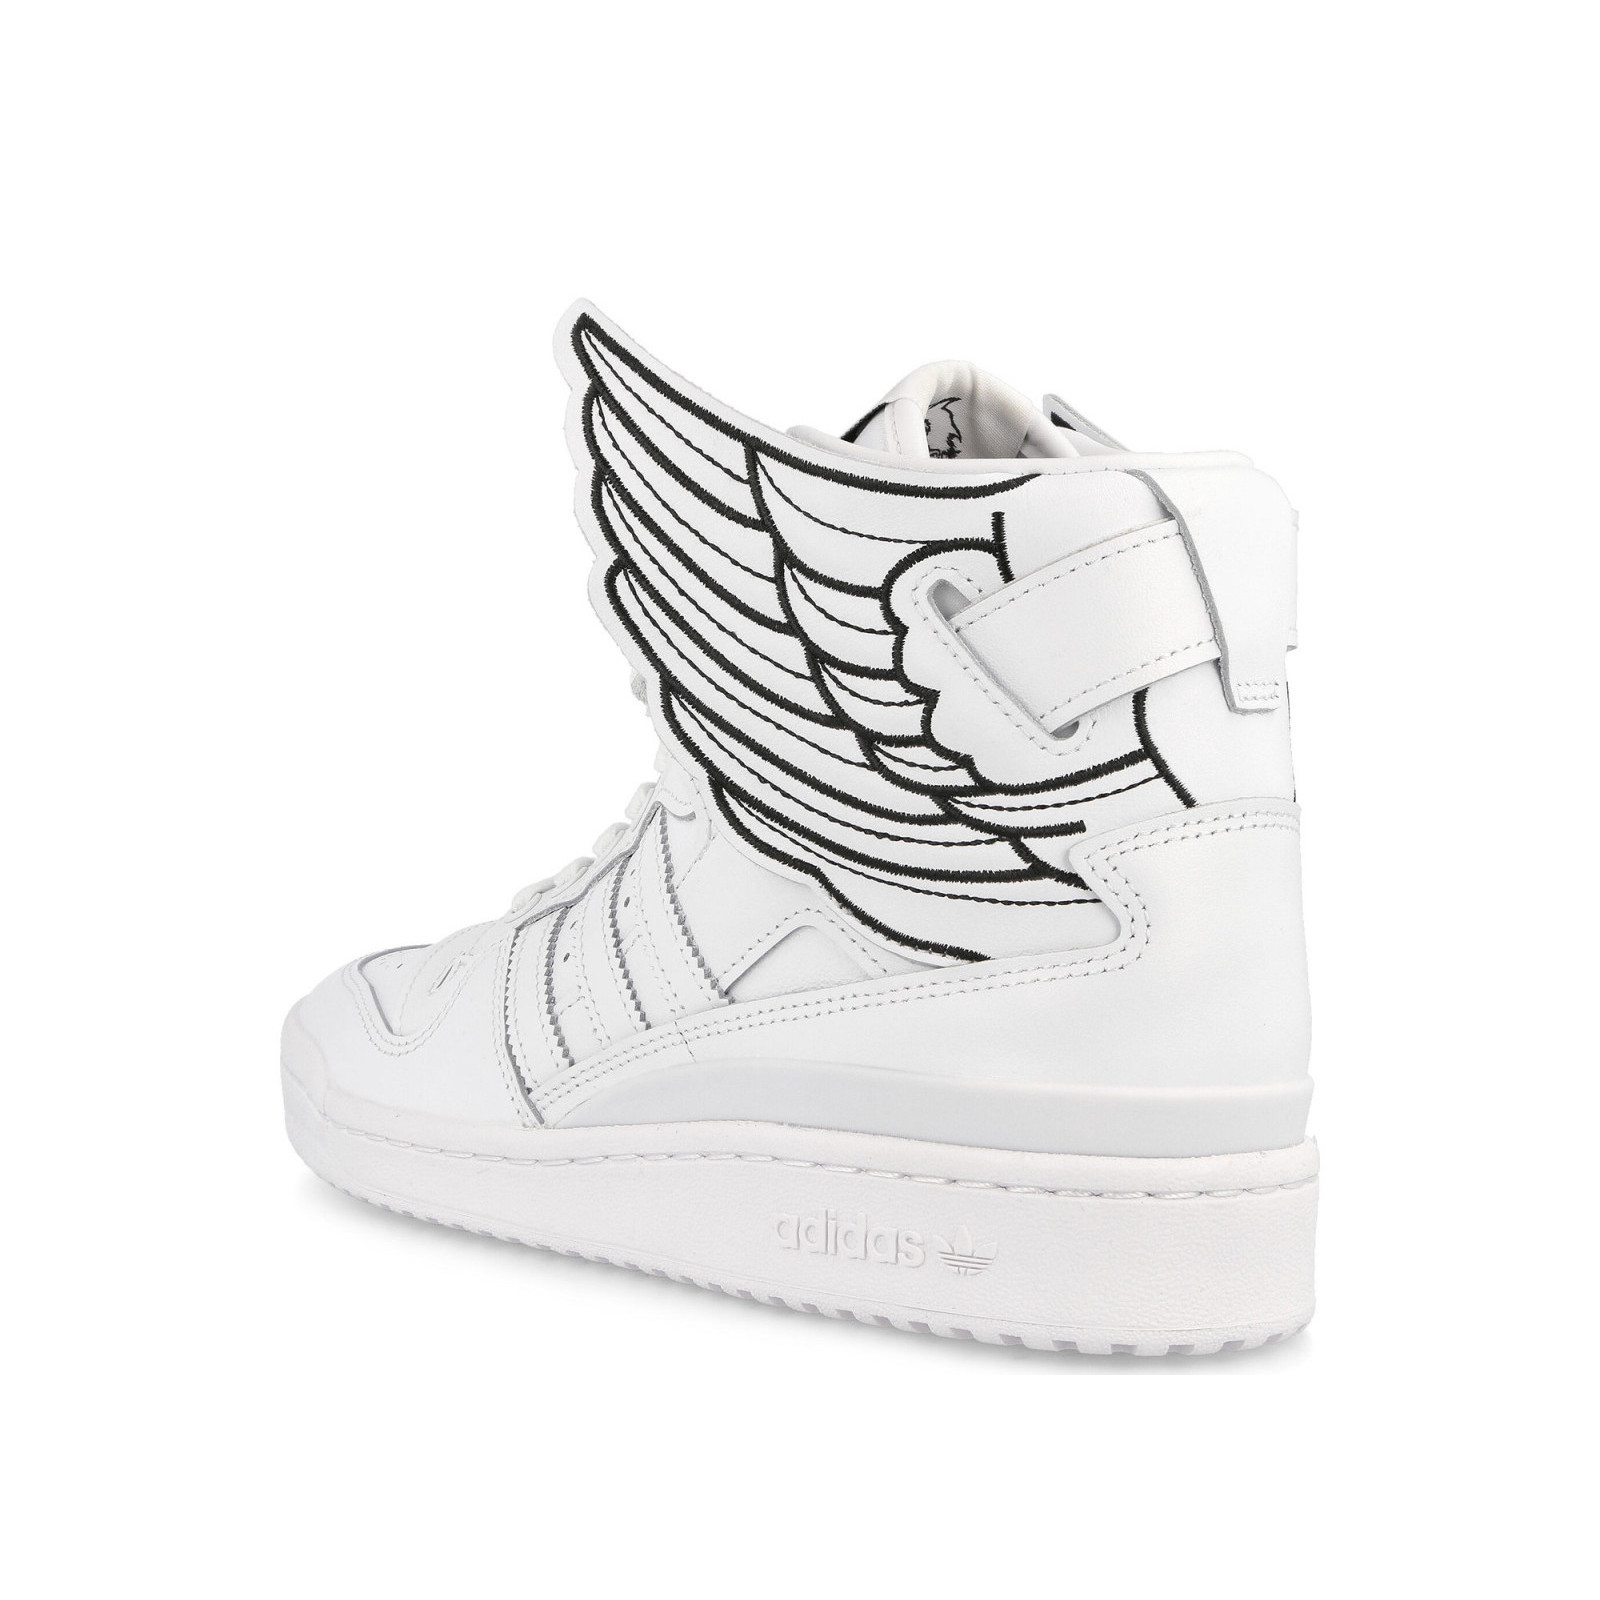 Jeremy Scott x Adidas New Wings 4.0